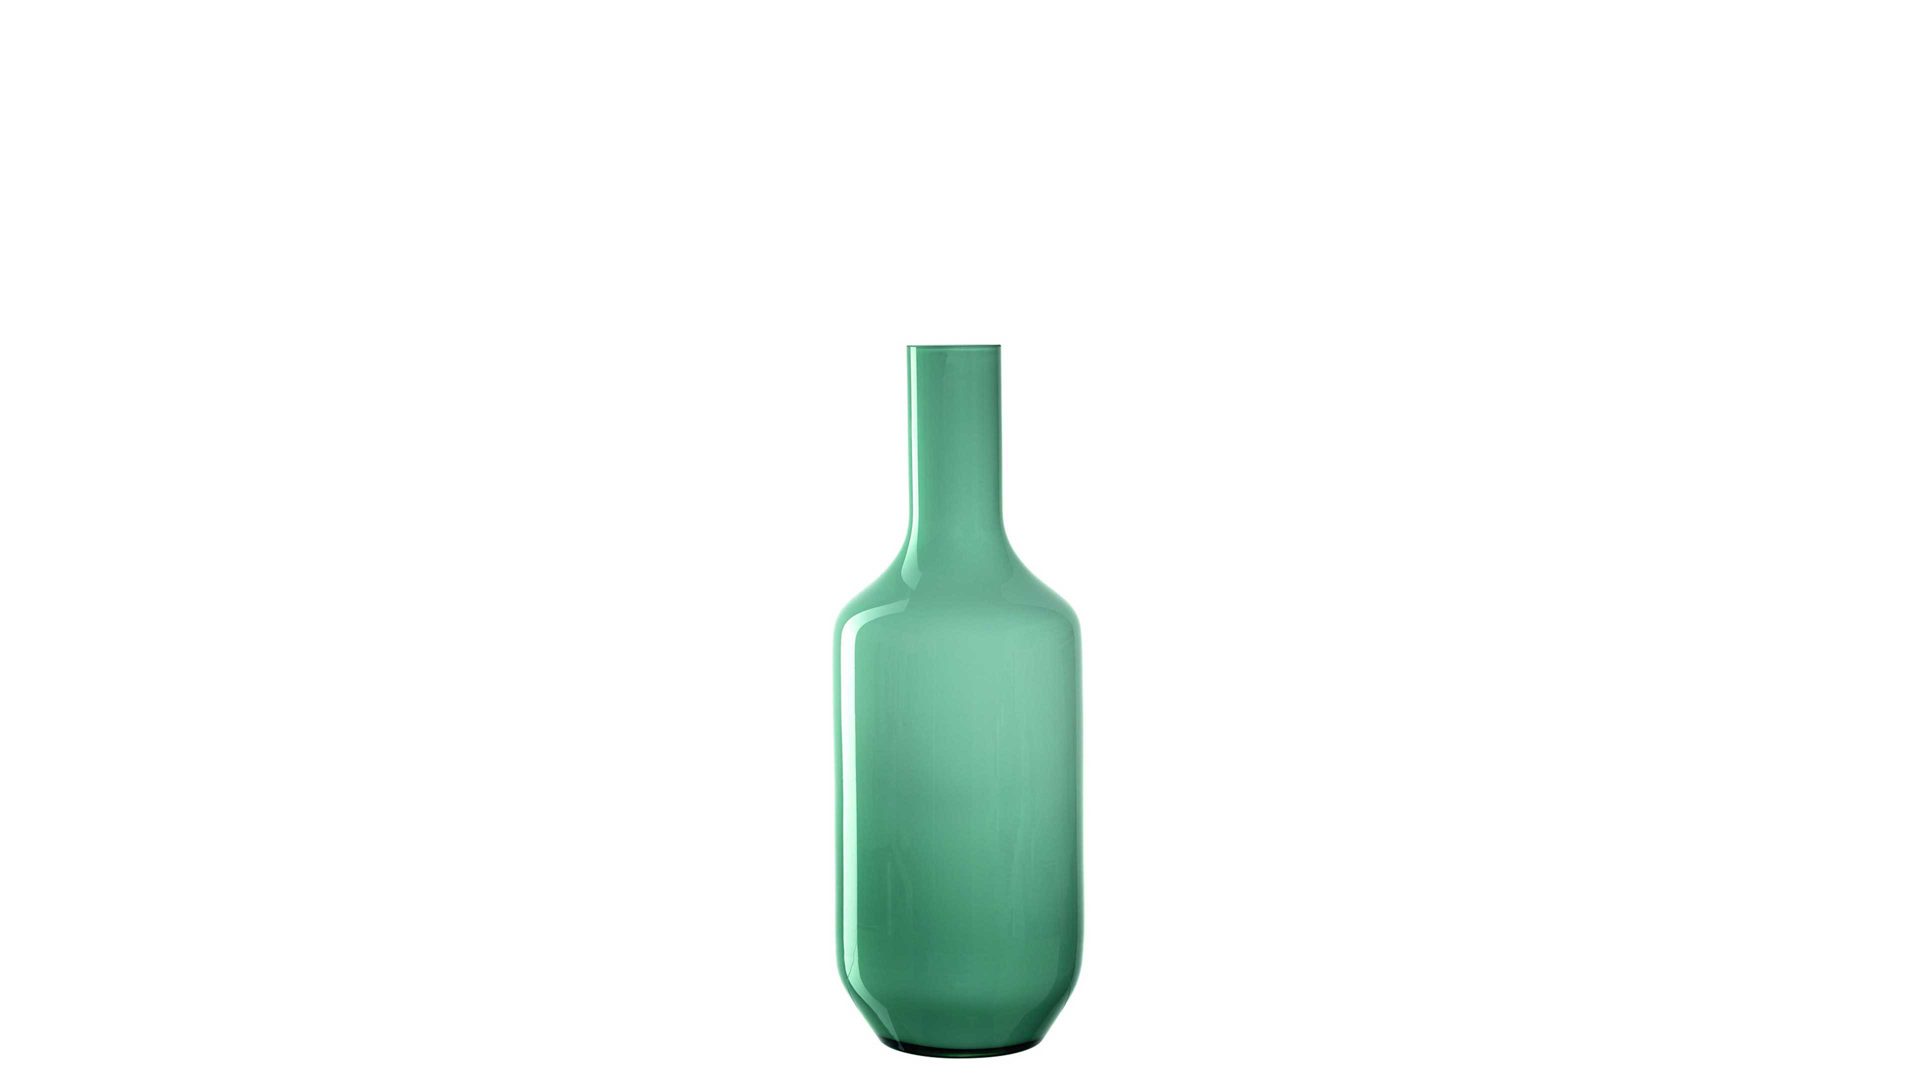 Vase Leonardo | glaskoch aus Glas in Grün LEONARDO Vase Milano mintfarbenes Glas – Höhe ca. 39 cm